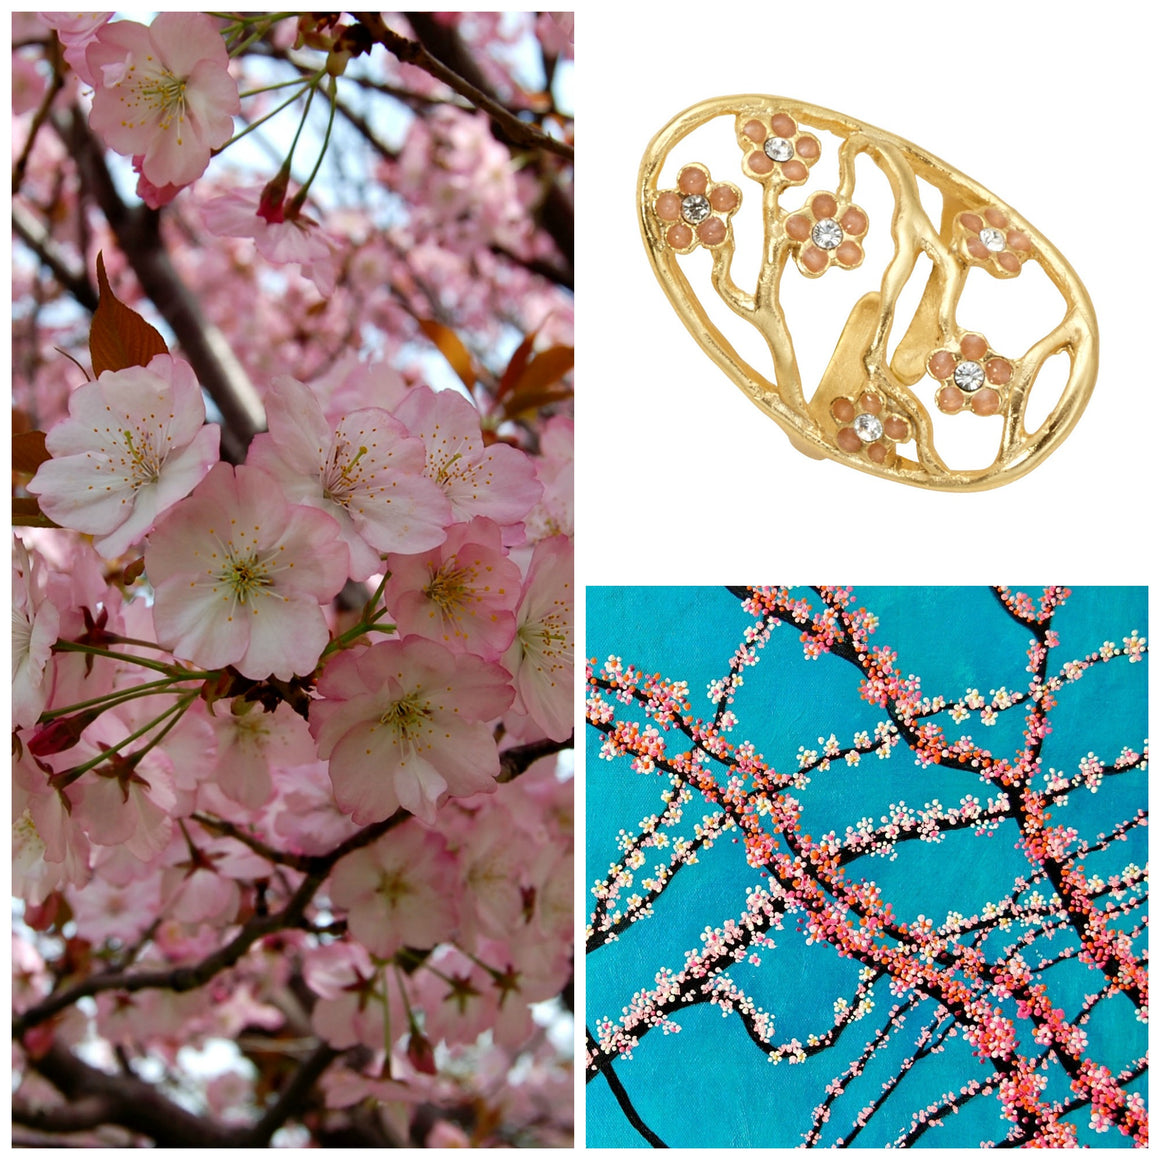 Cherry Blossom Ring - 24K Gold Vermeil